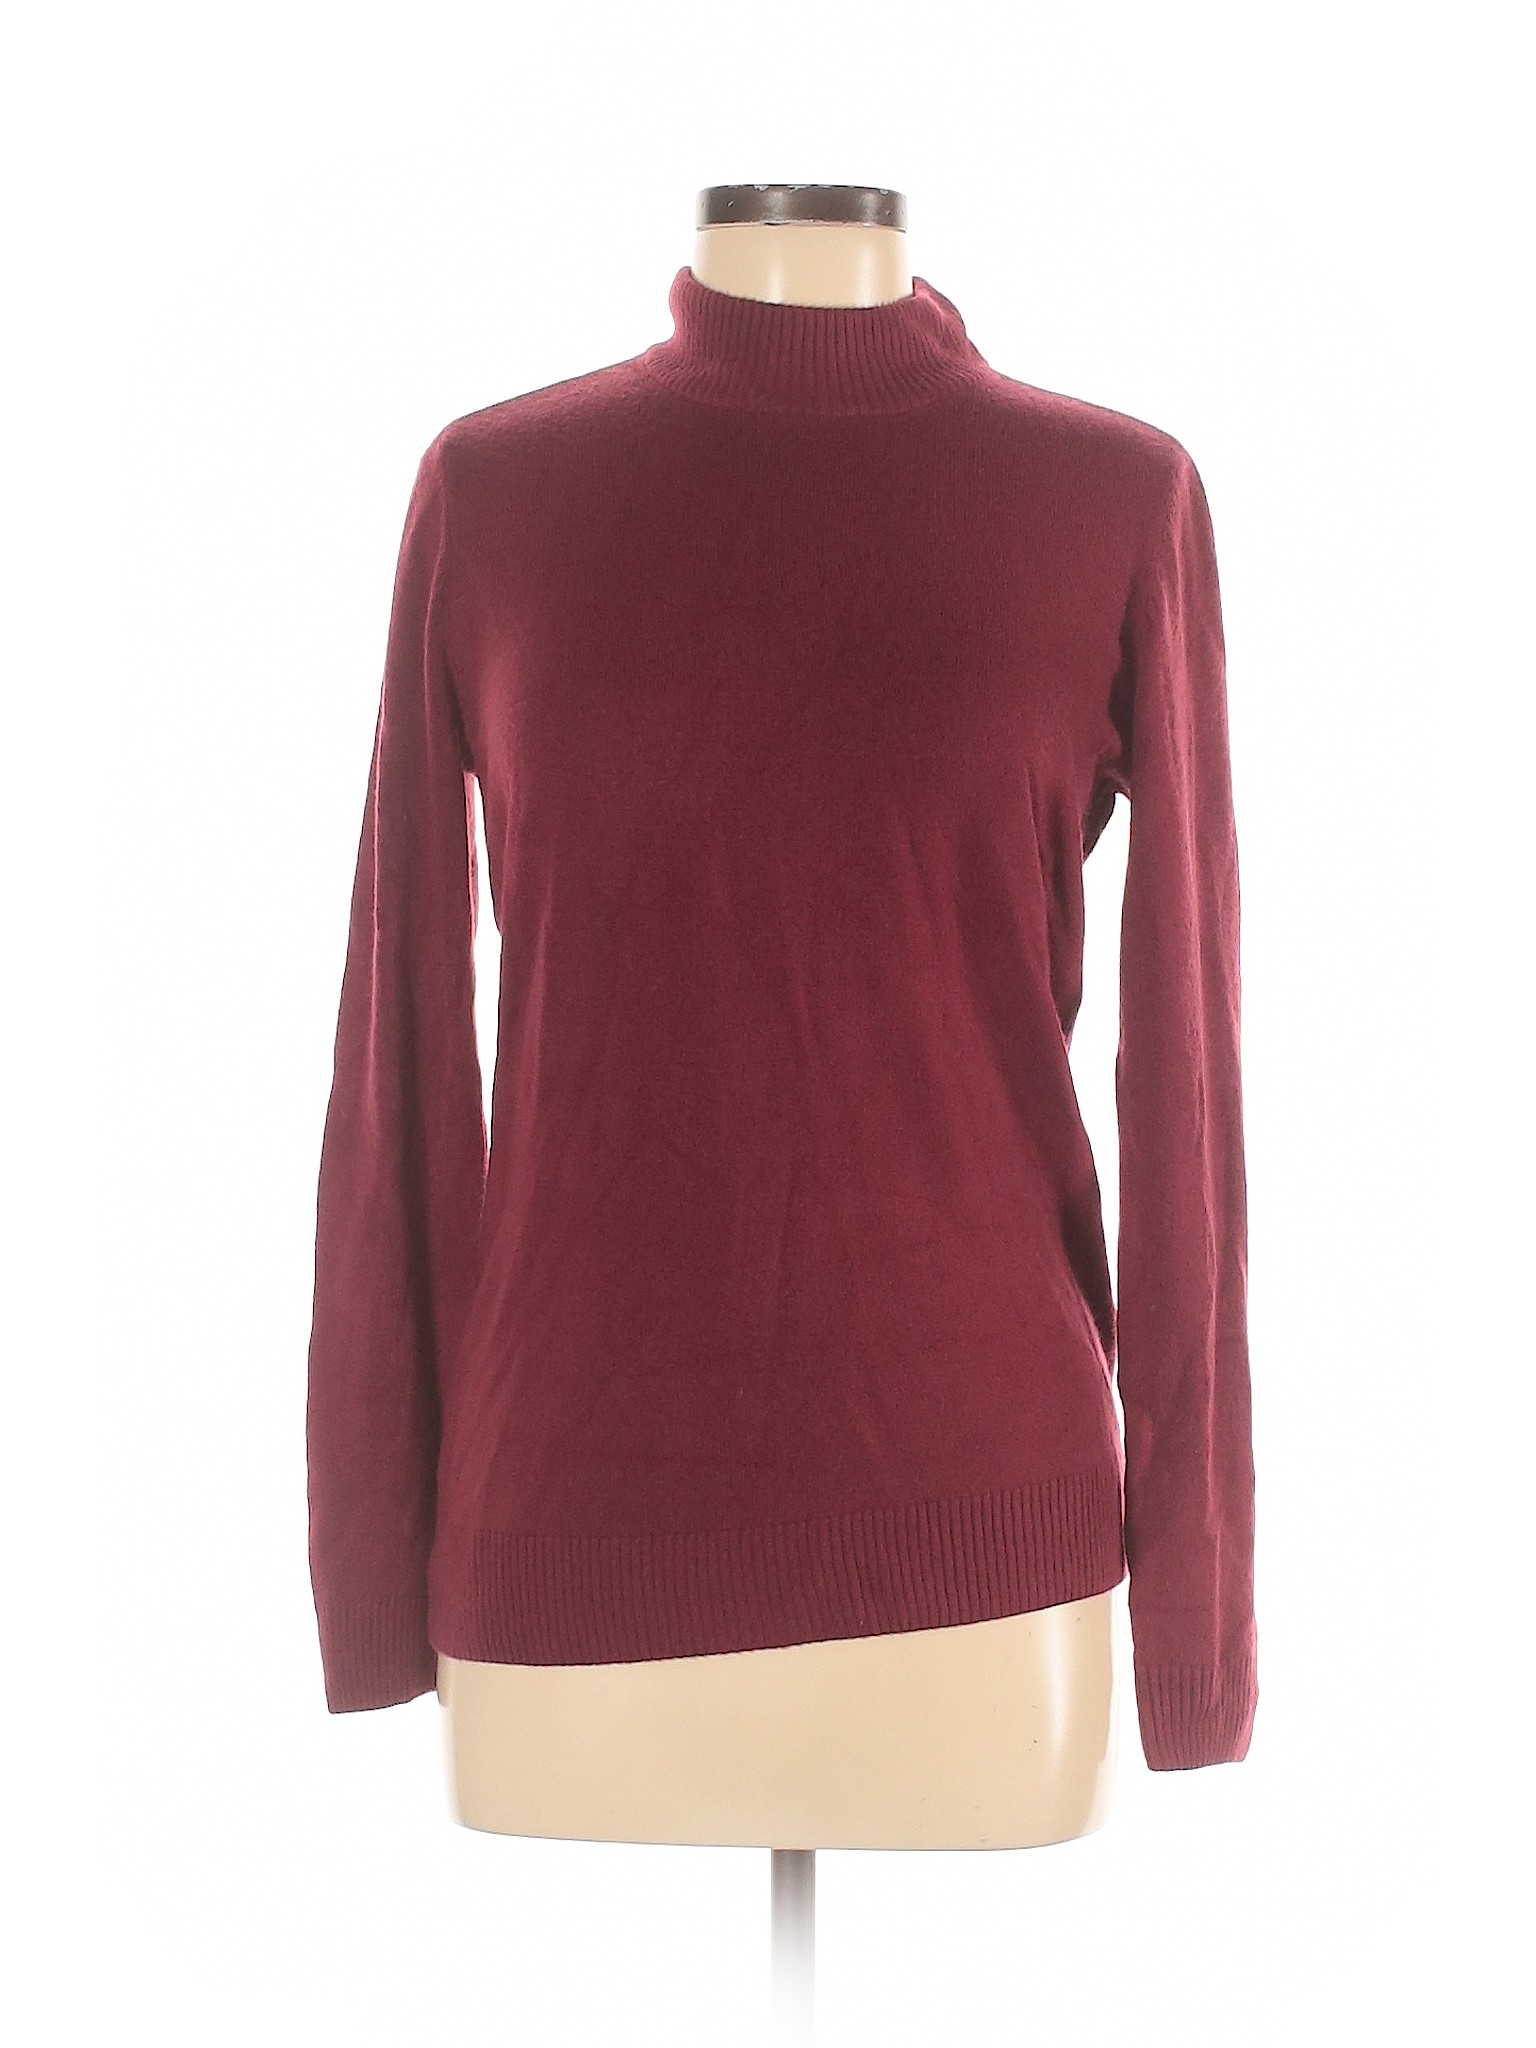 Appleseeds Women Red Pullover Sweater M | eBay